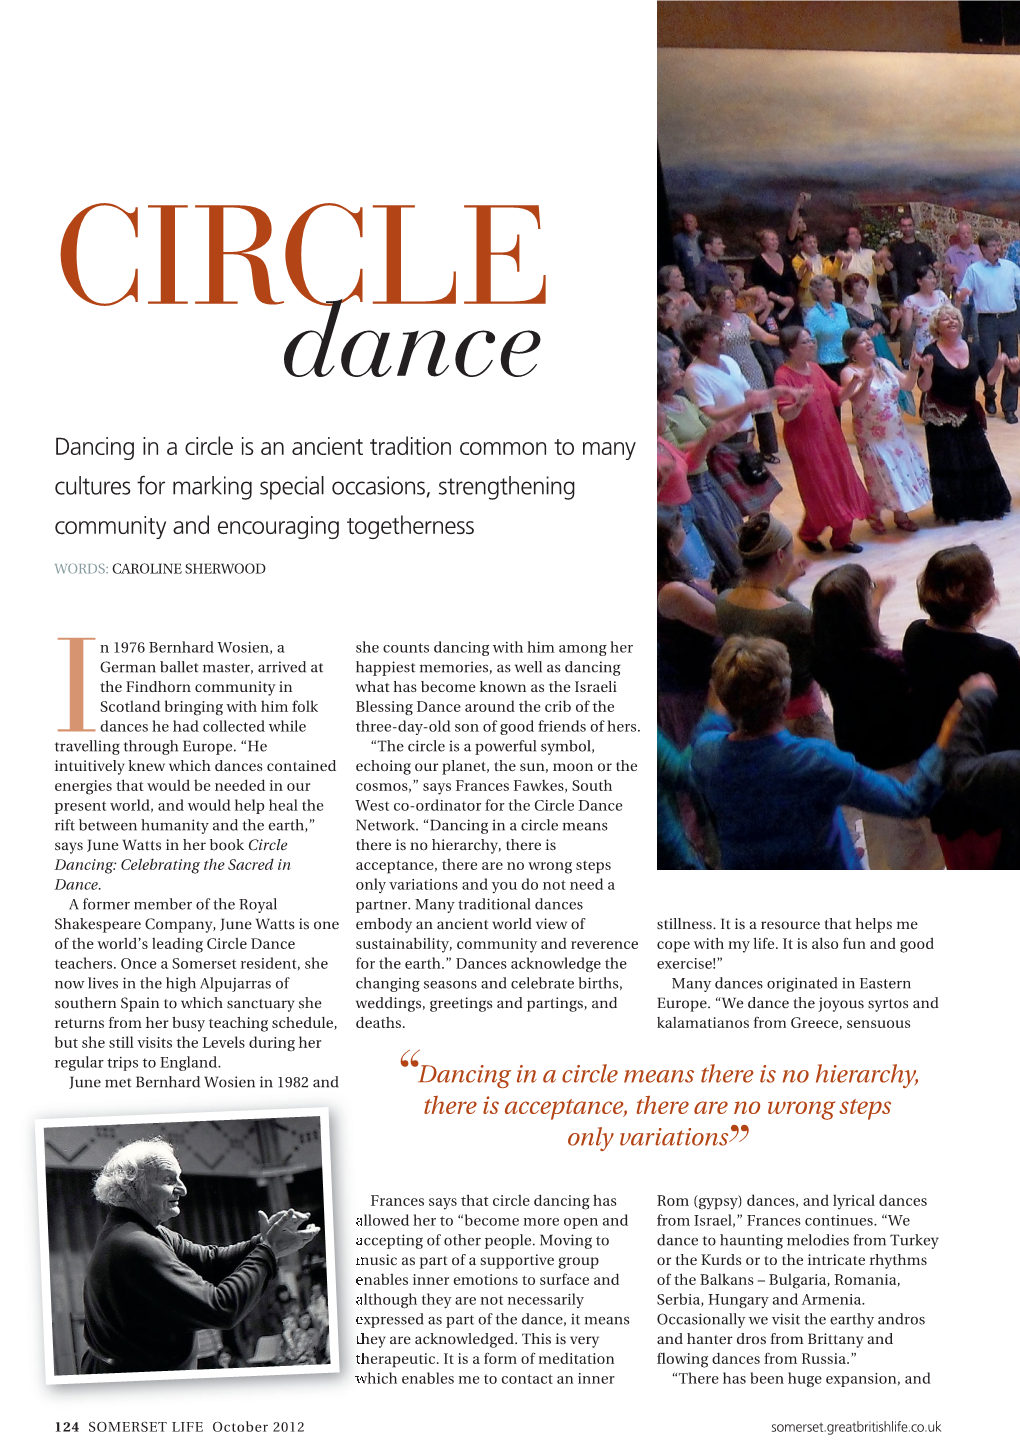 Article on Circle Dancing